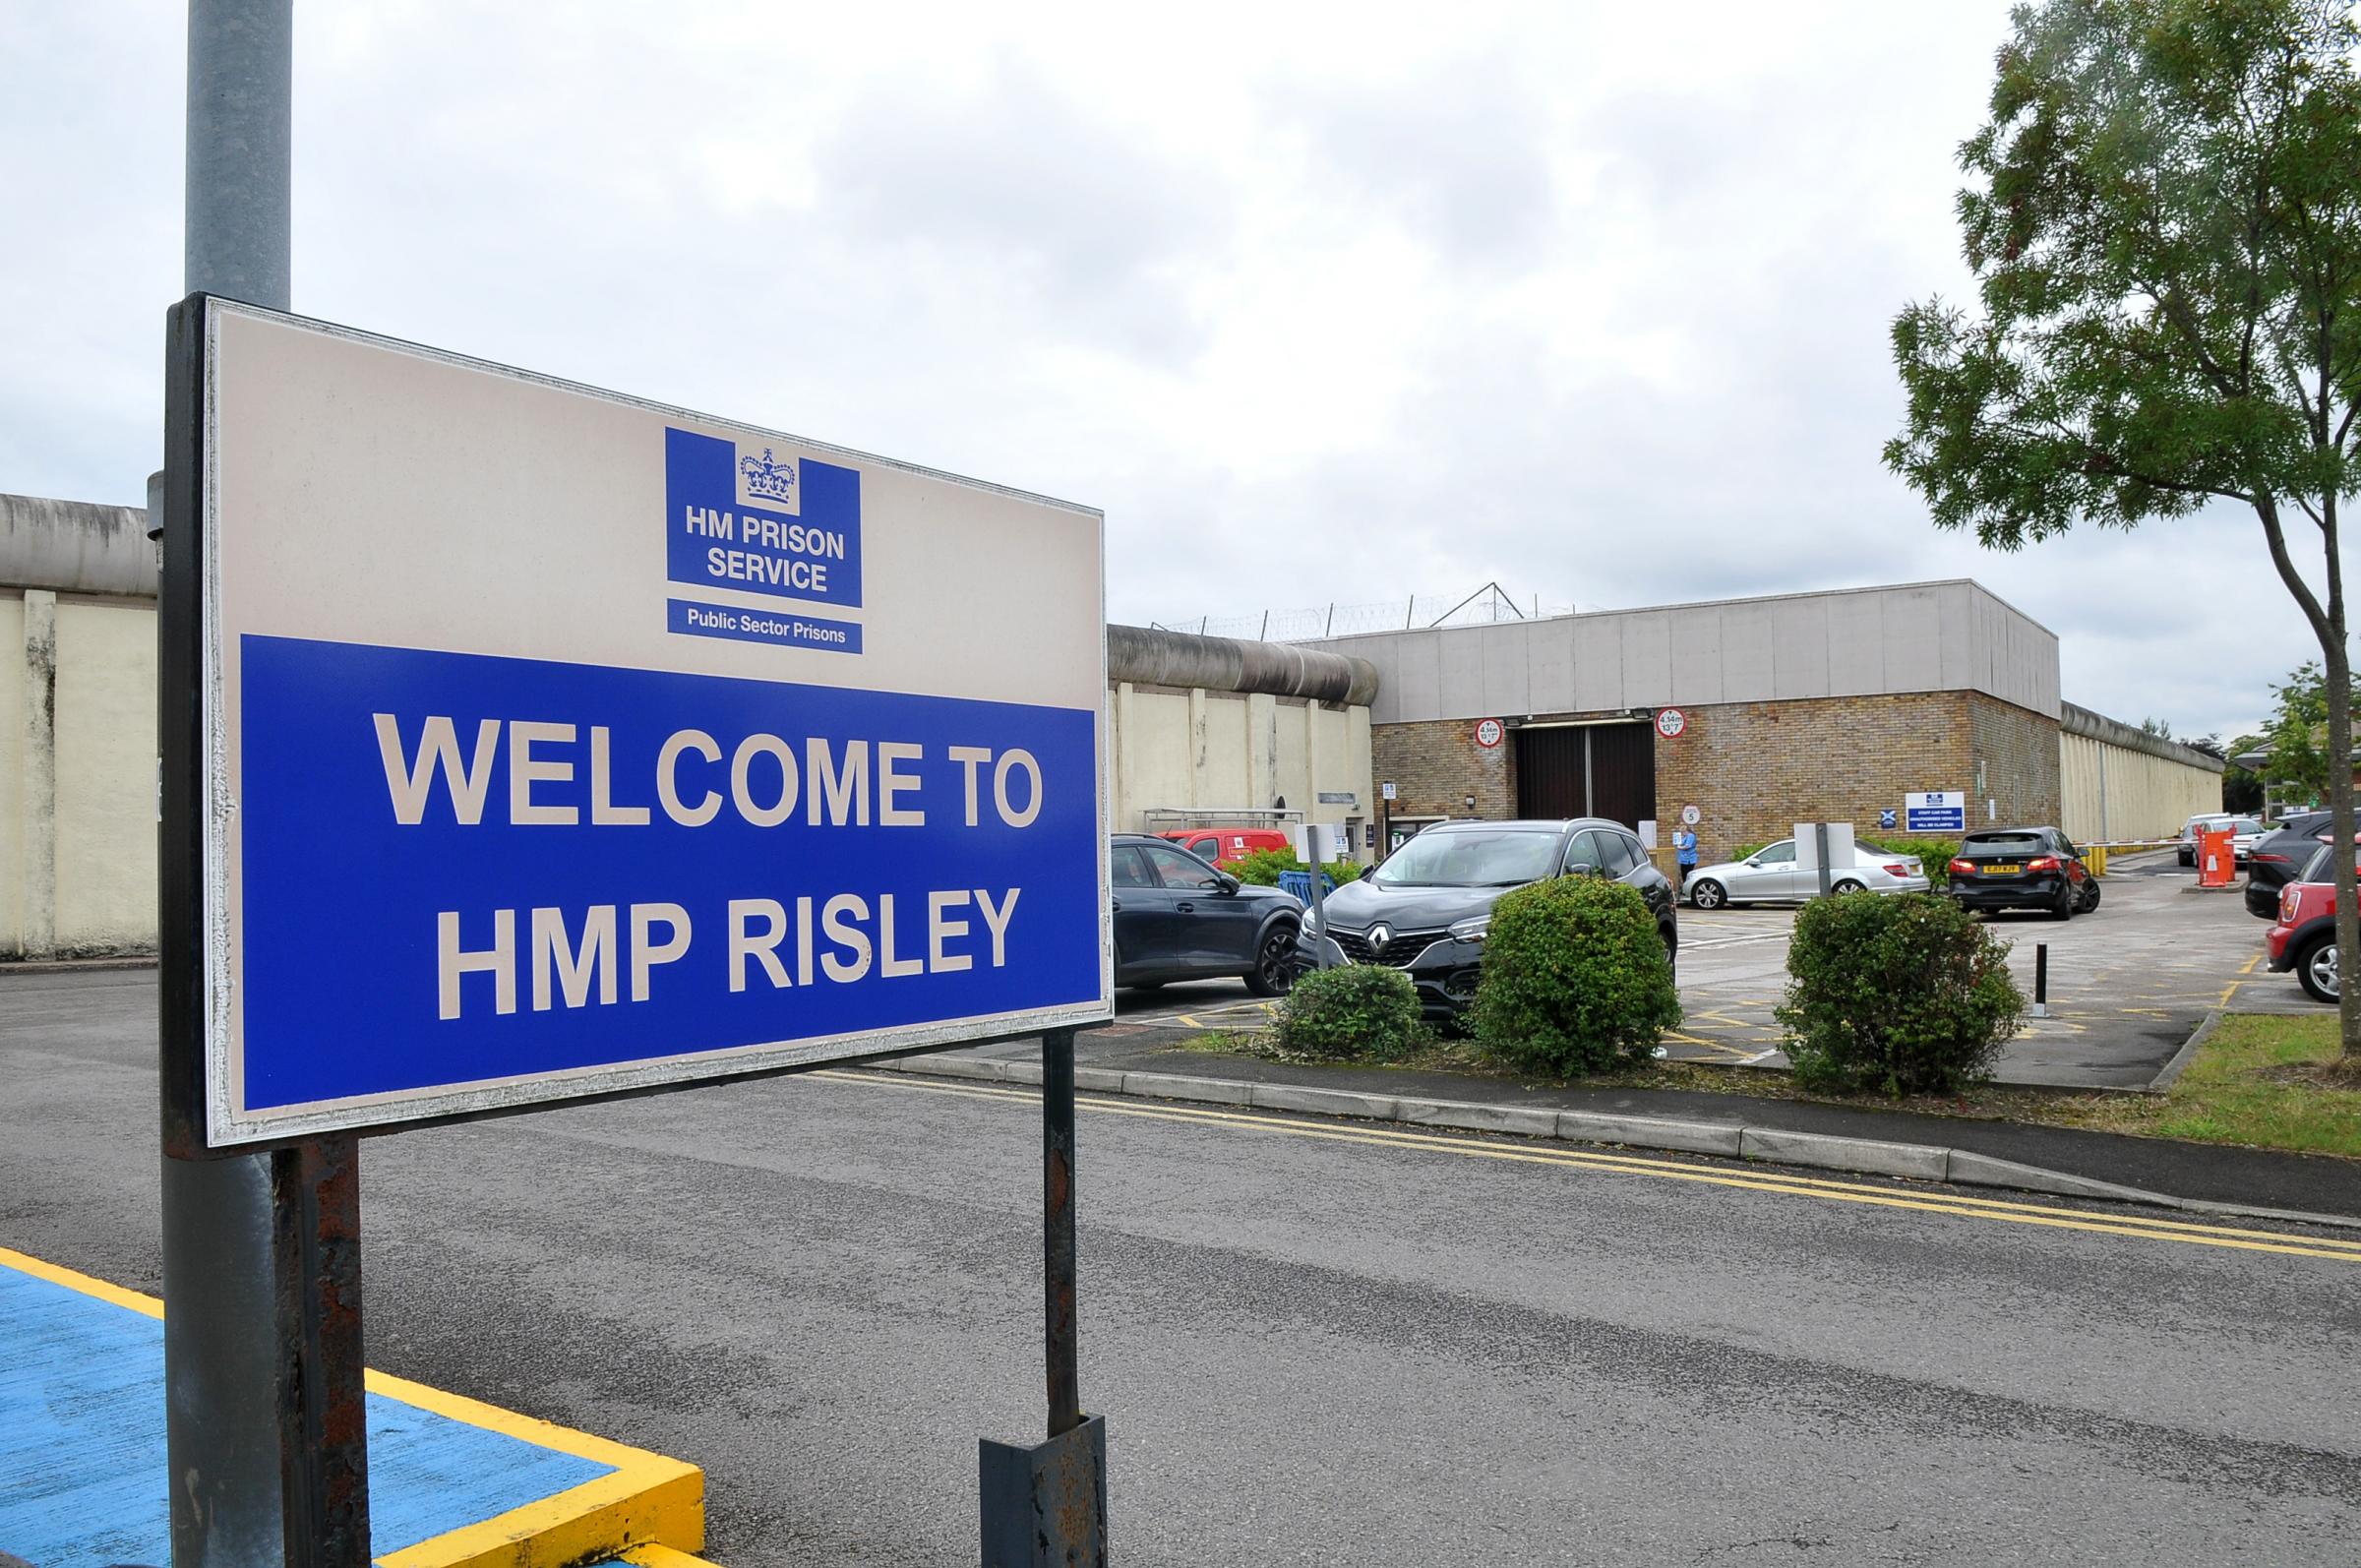 HM Prison Risley